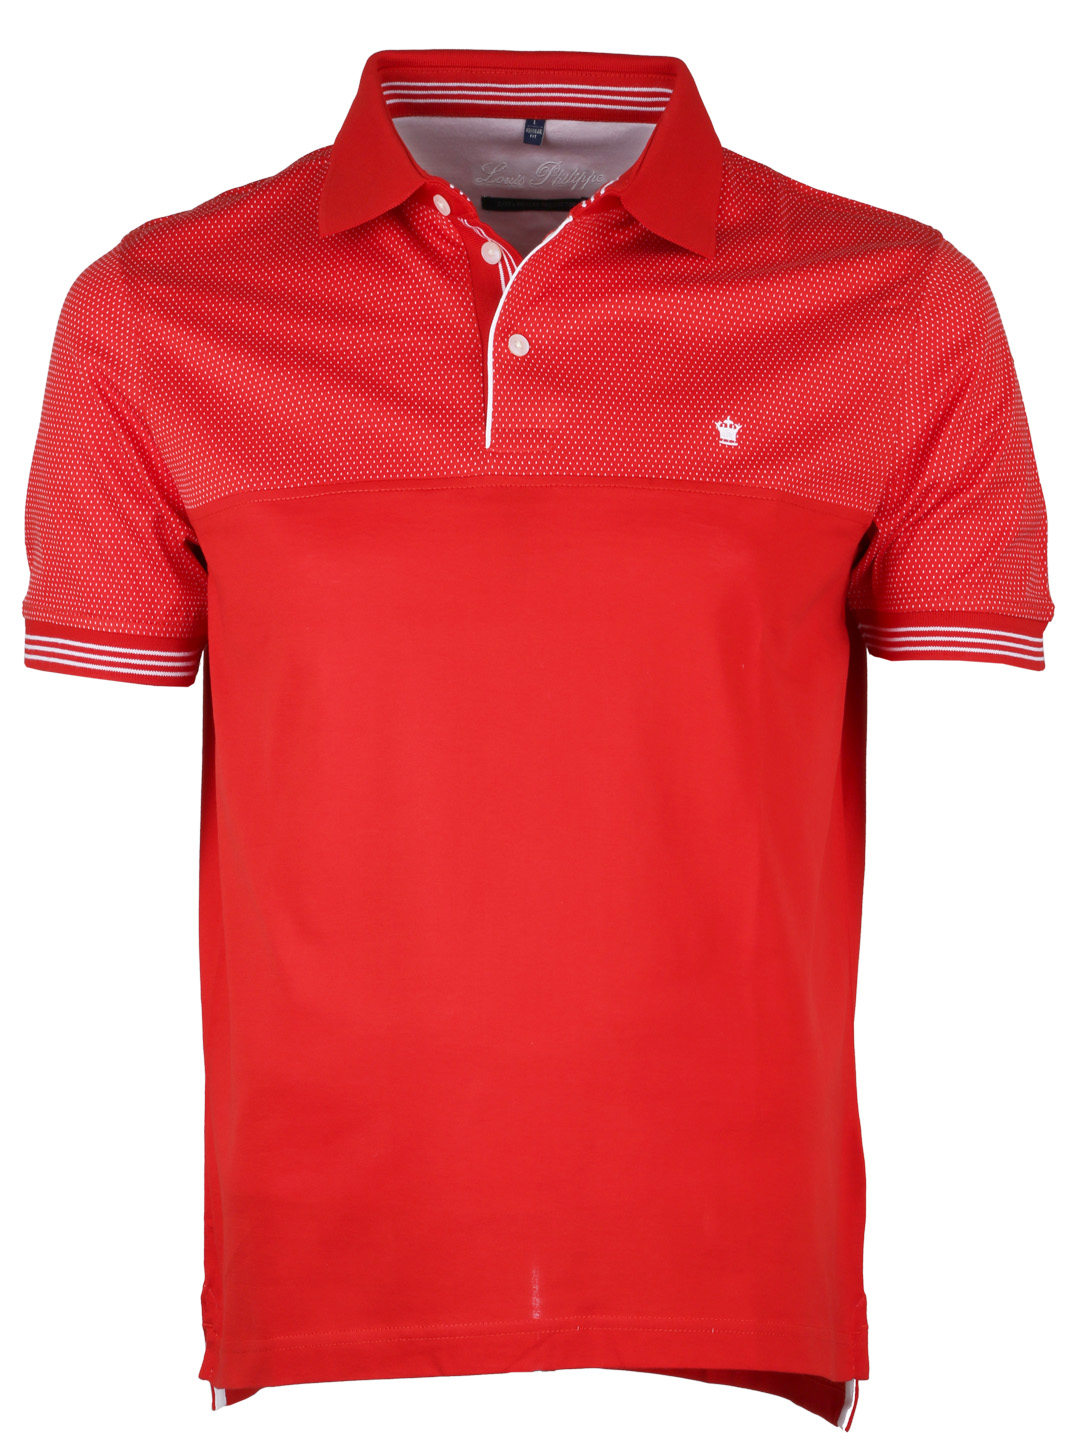 Louis Philippe men slim fit cotton plain red T-shirt - G3-MTS1381 | www.semadata.org